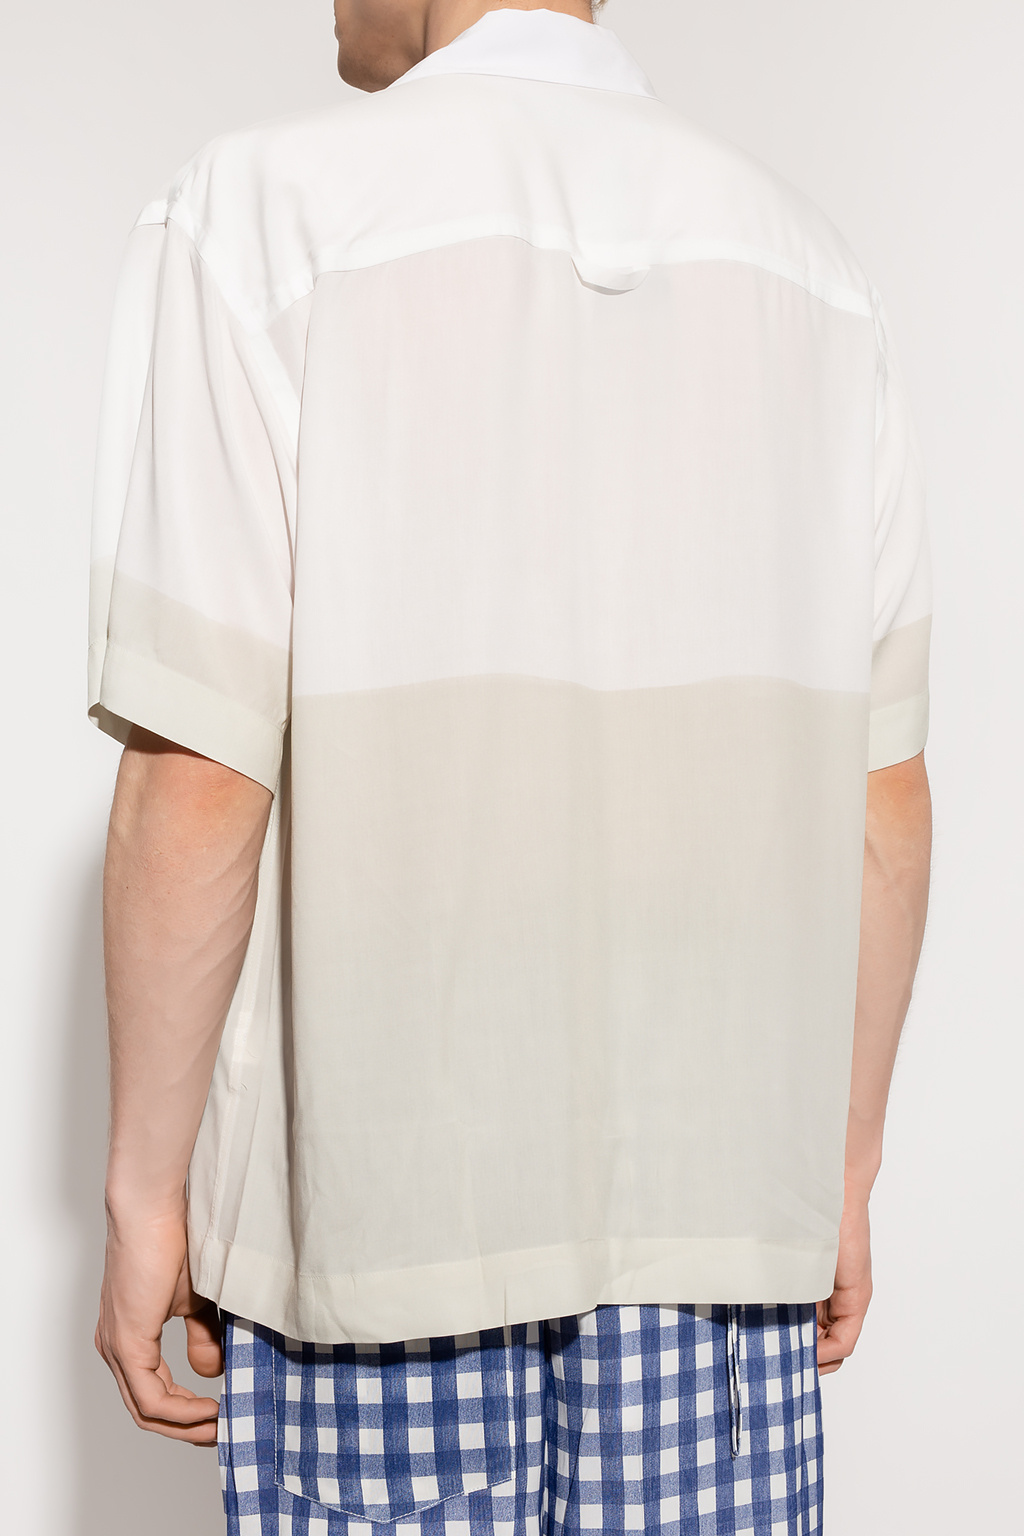 Jacquemus ‘Jean’ short-sleeved shirt